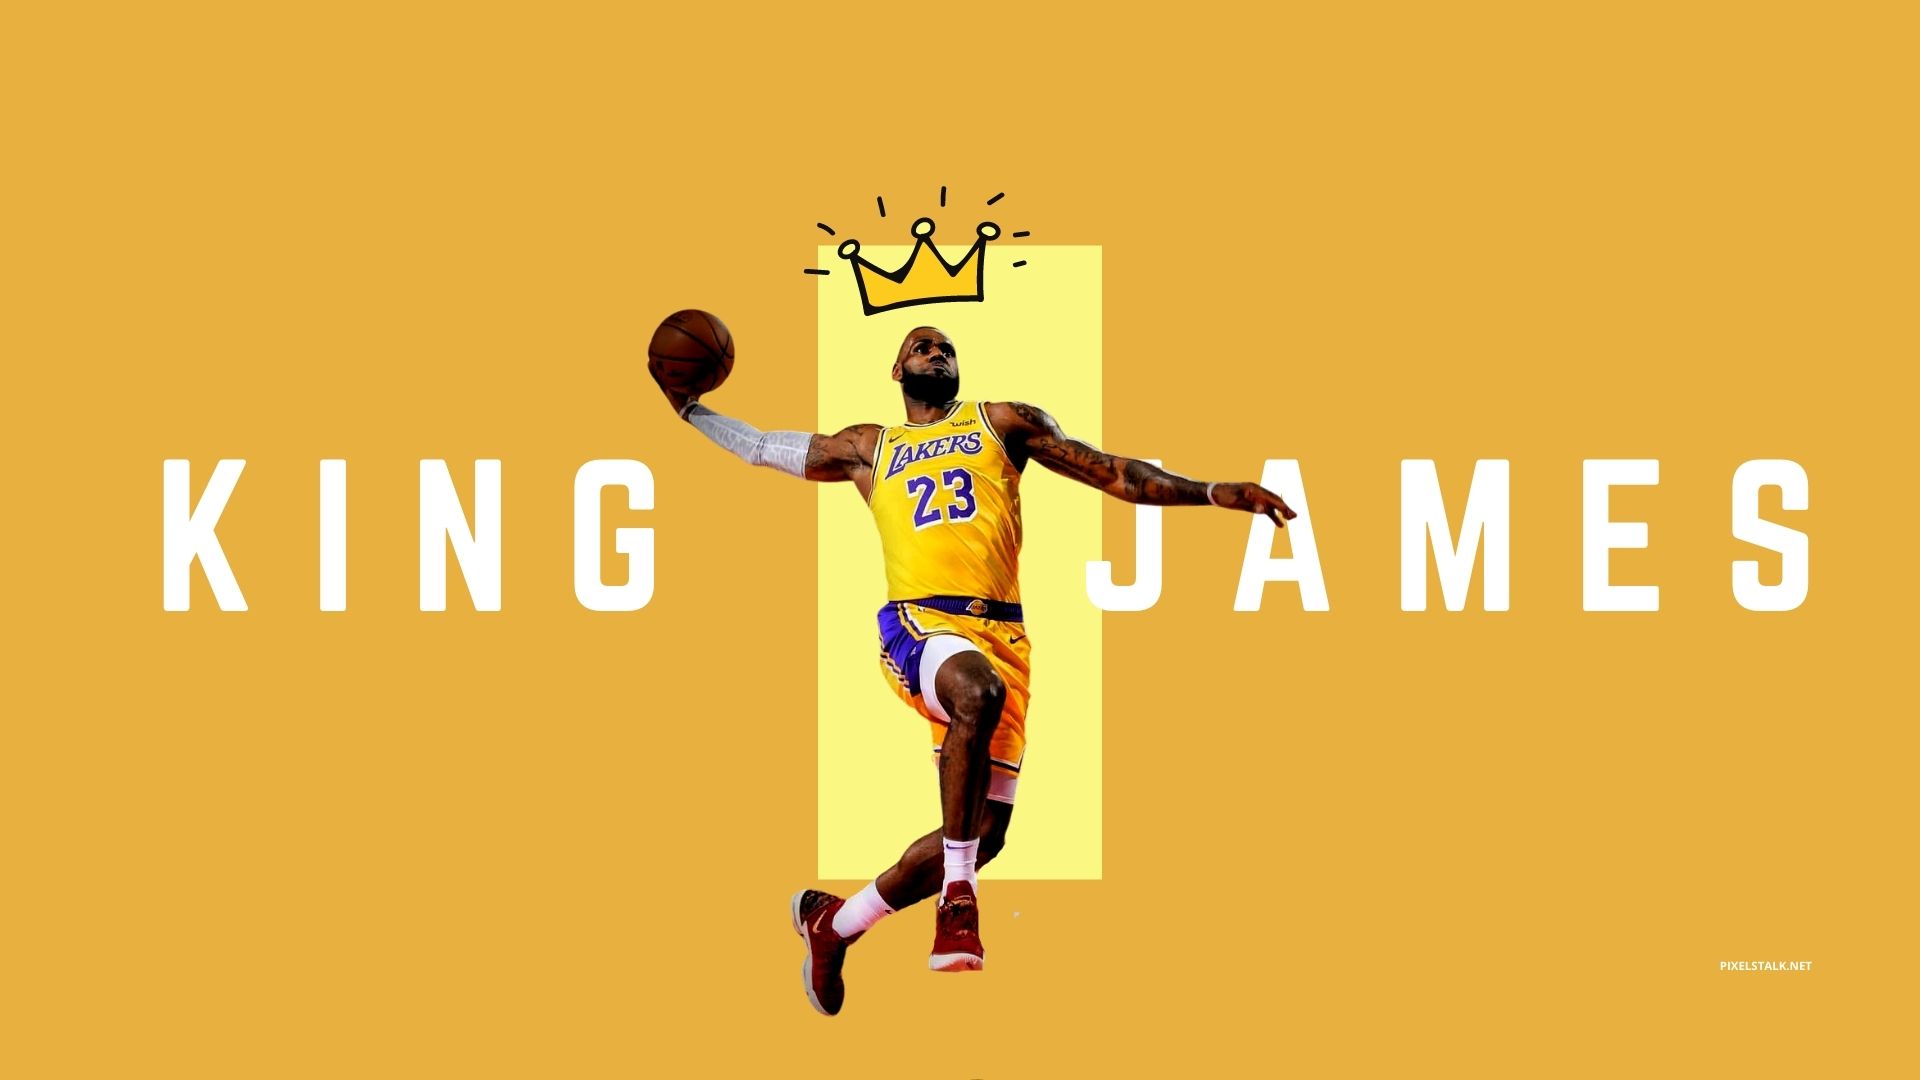 Download King Lebron James Long Live The King Wallpaper